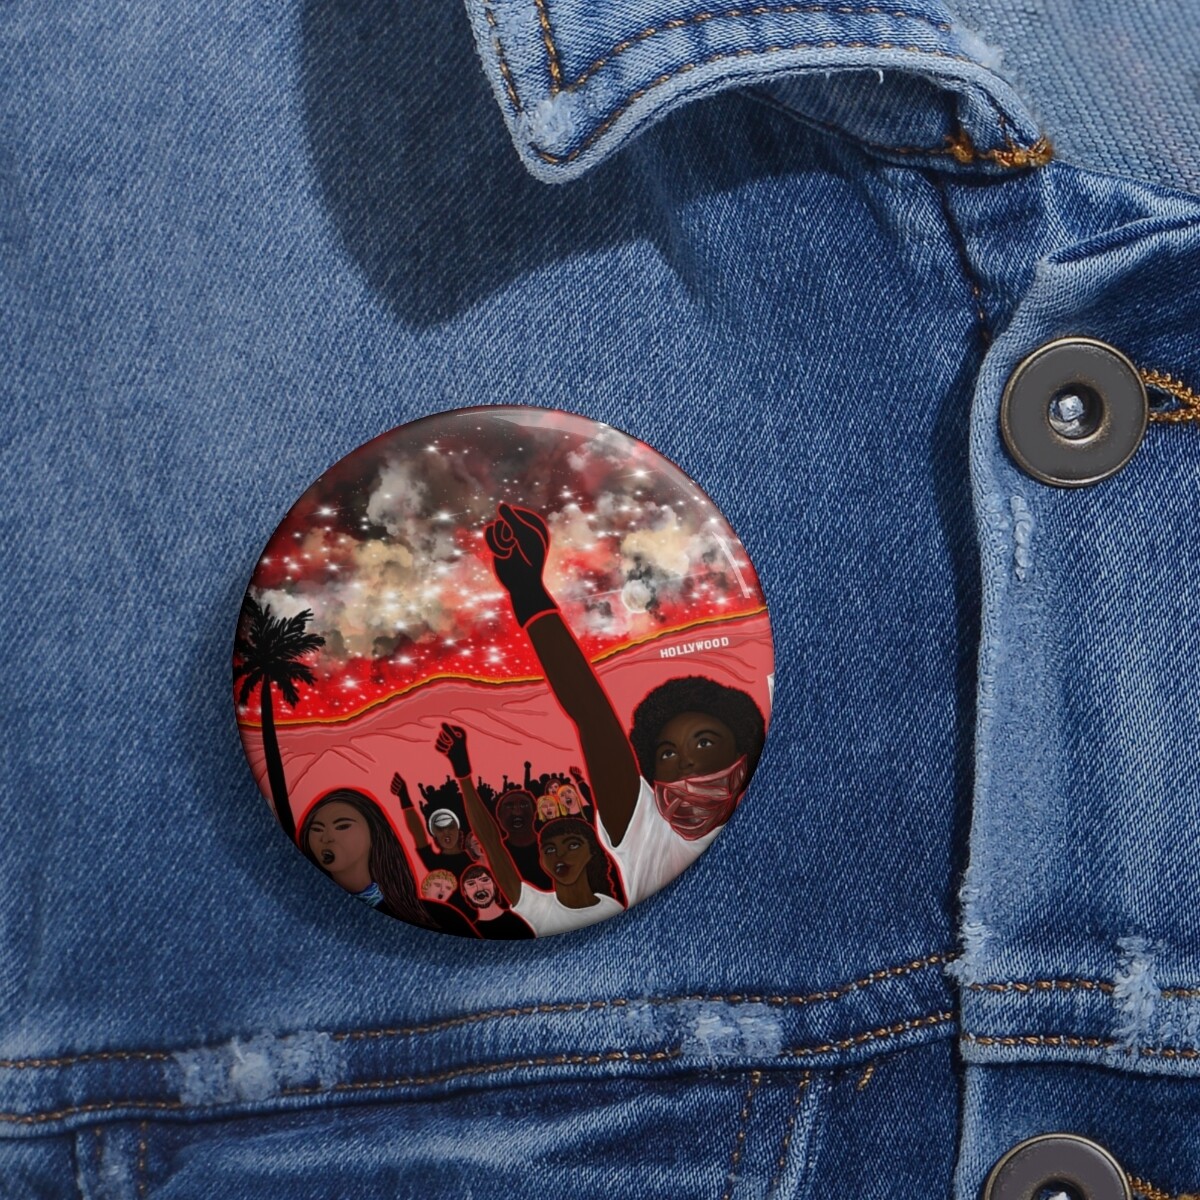 Set of 5 Black Lives Matter Pin back Buttons 1.25"